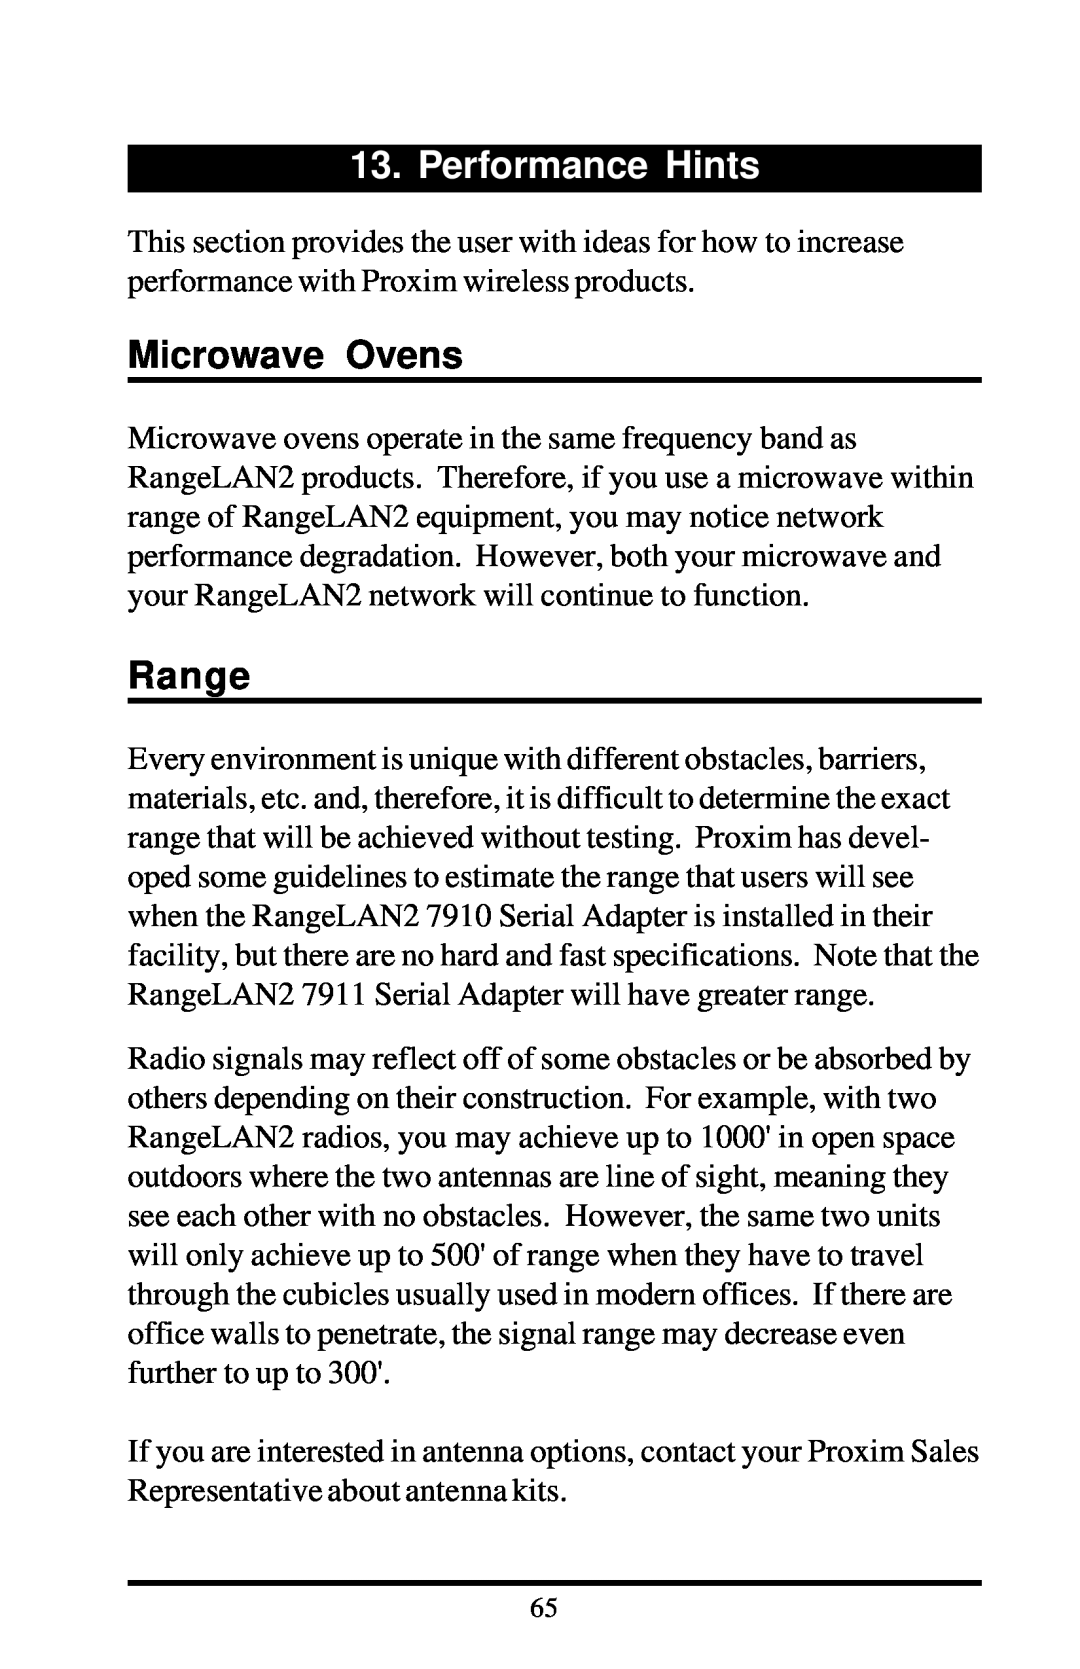 Proxima ASA 7911, 7910 manual Performance Hints, Microwave Ovens, Range 